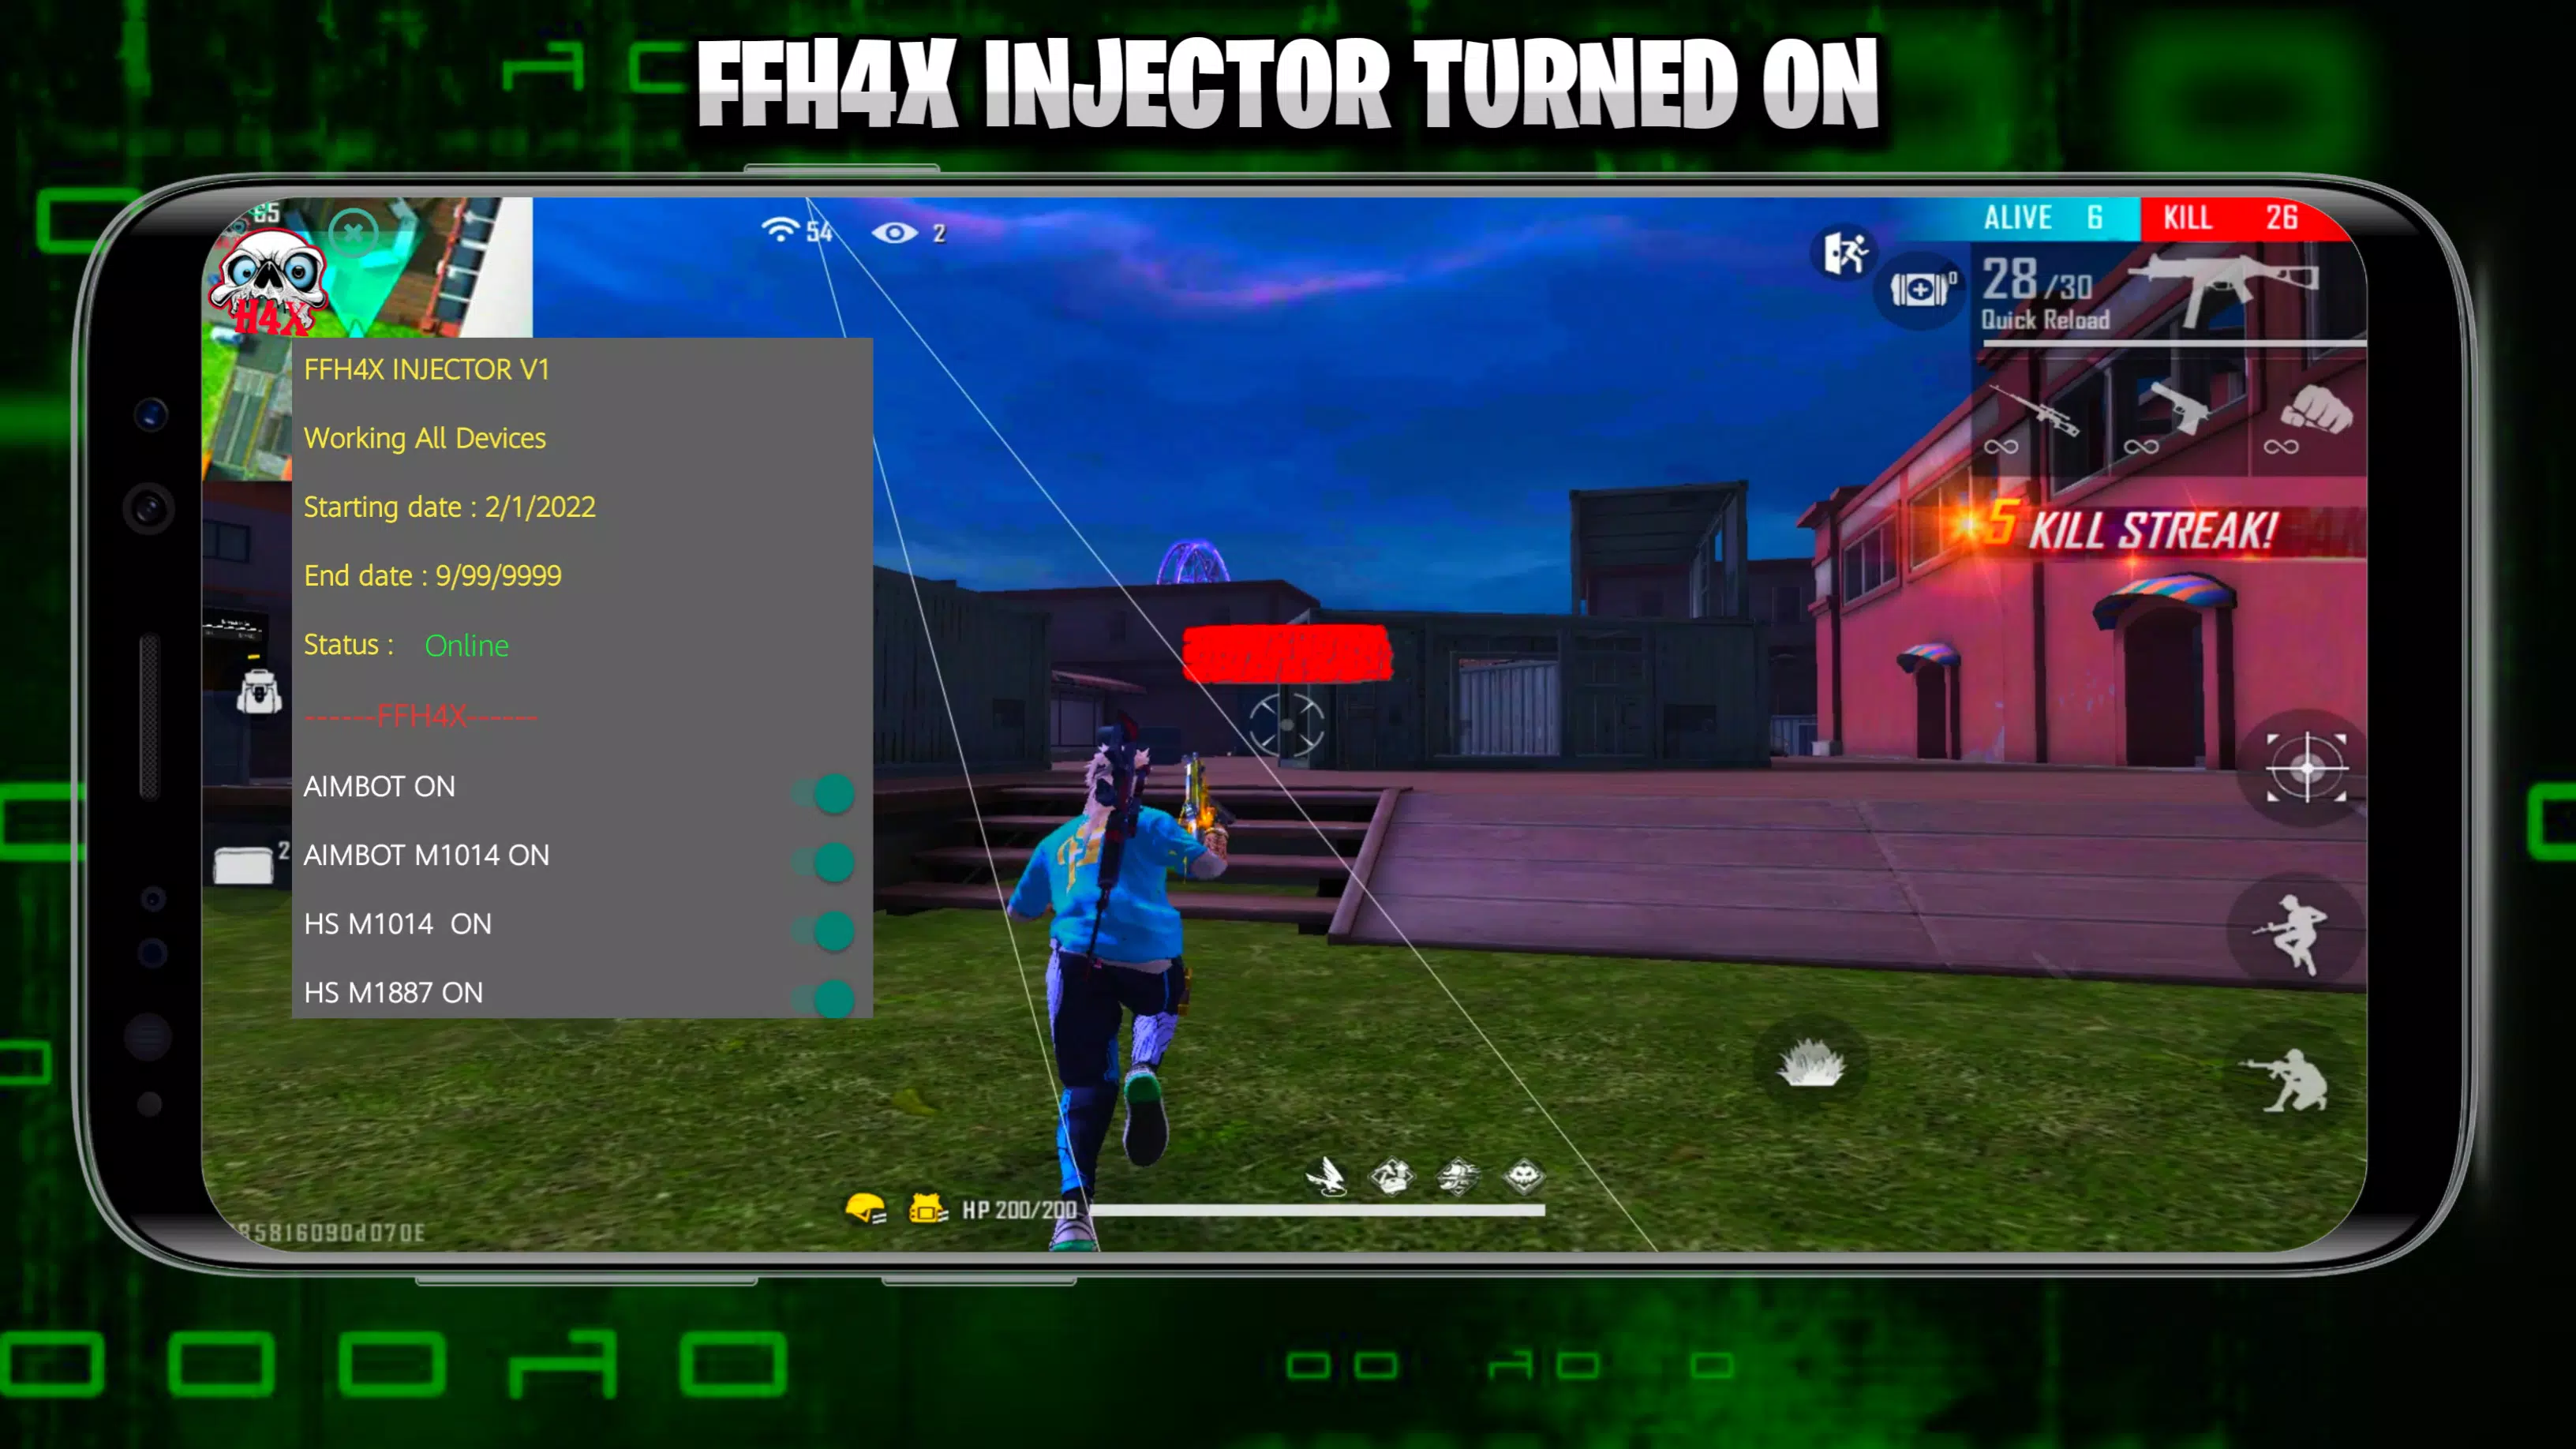 FFH4X Injector APK [Latest Version] v121 Free Download